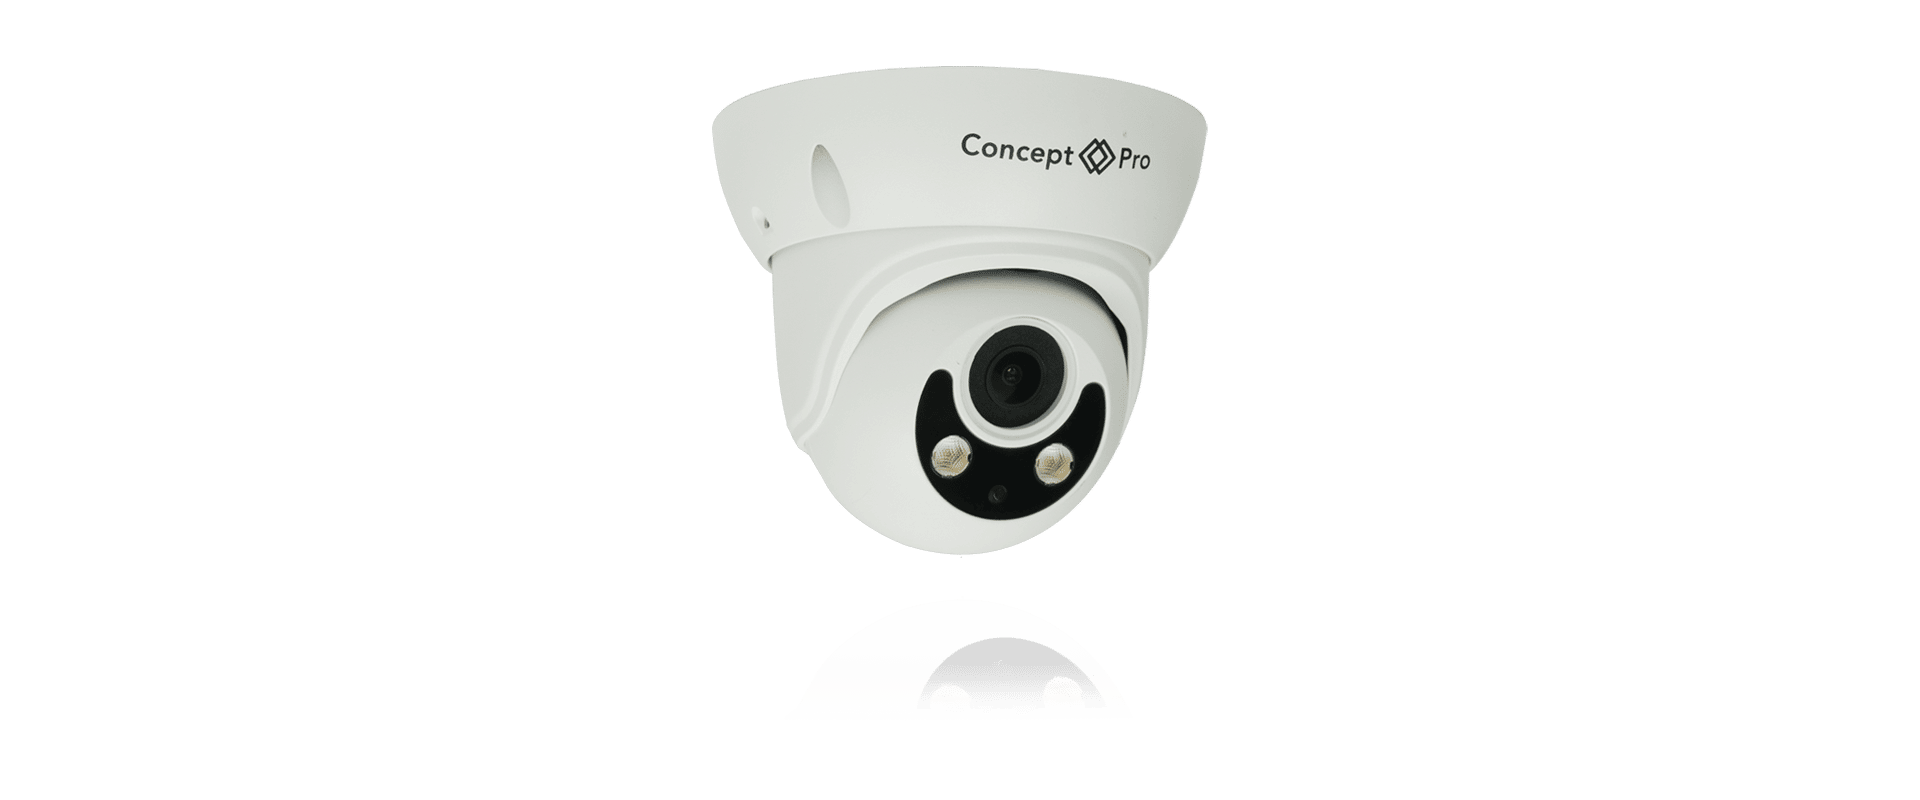 White side facing Concept Pro Turret Camera